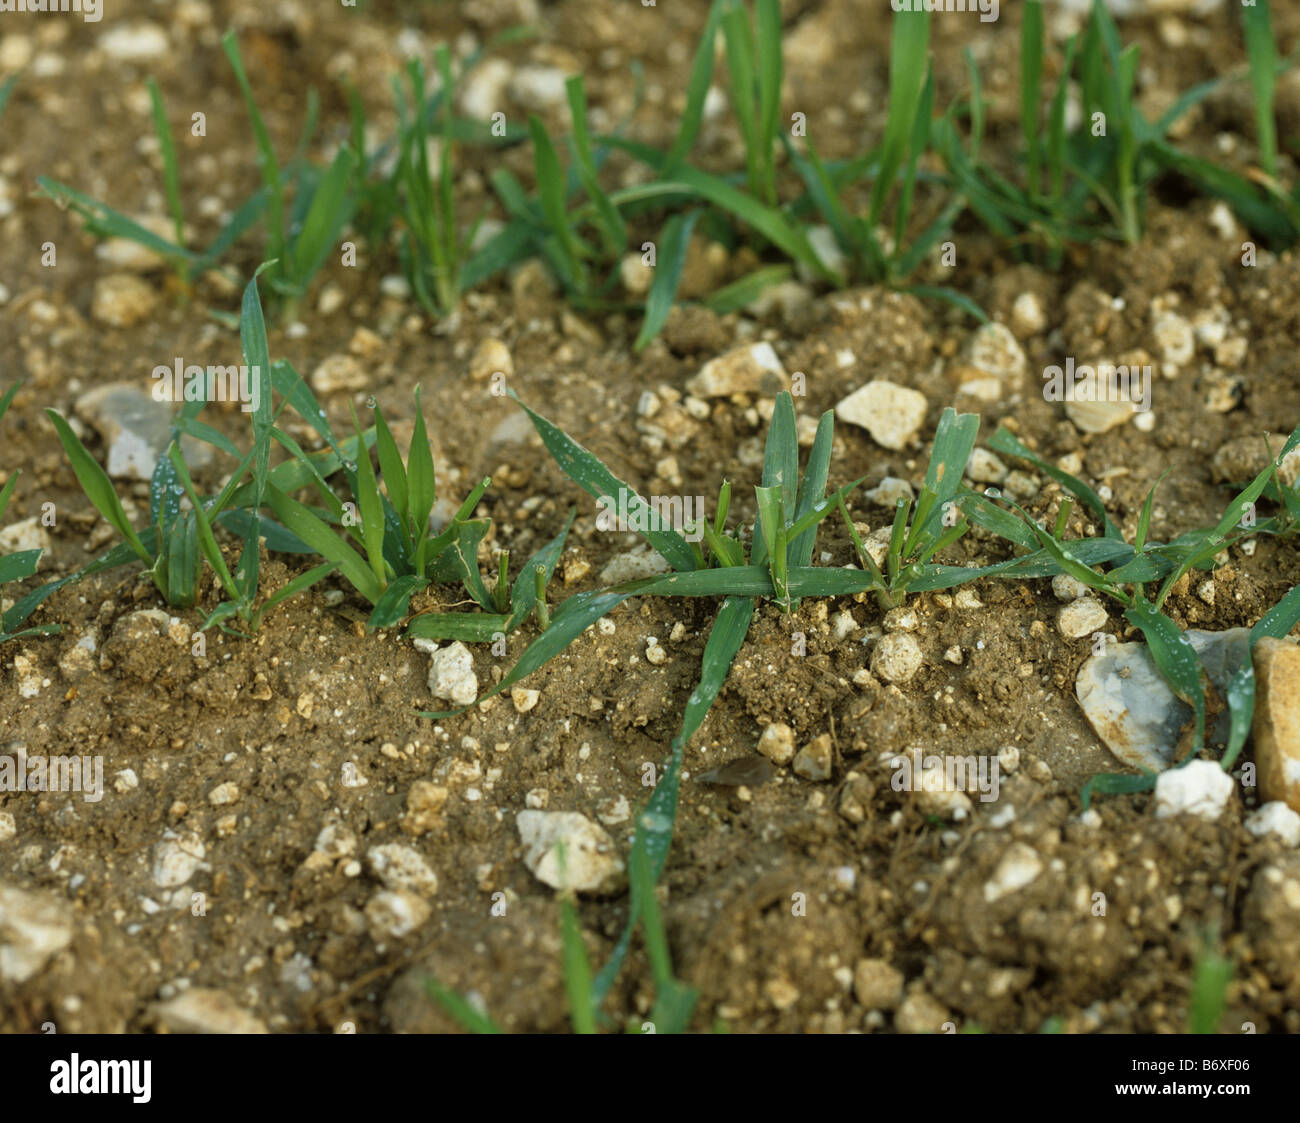 Seedling barley plants grazed by rabbits Hampshire England Stock Photo